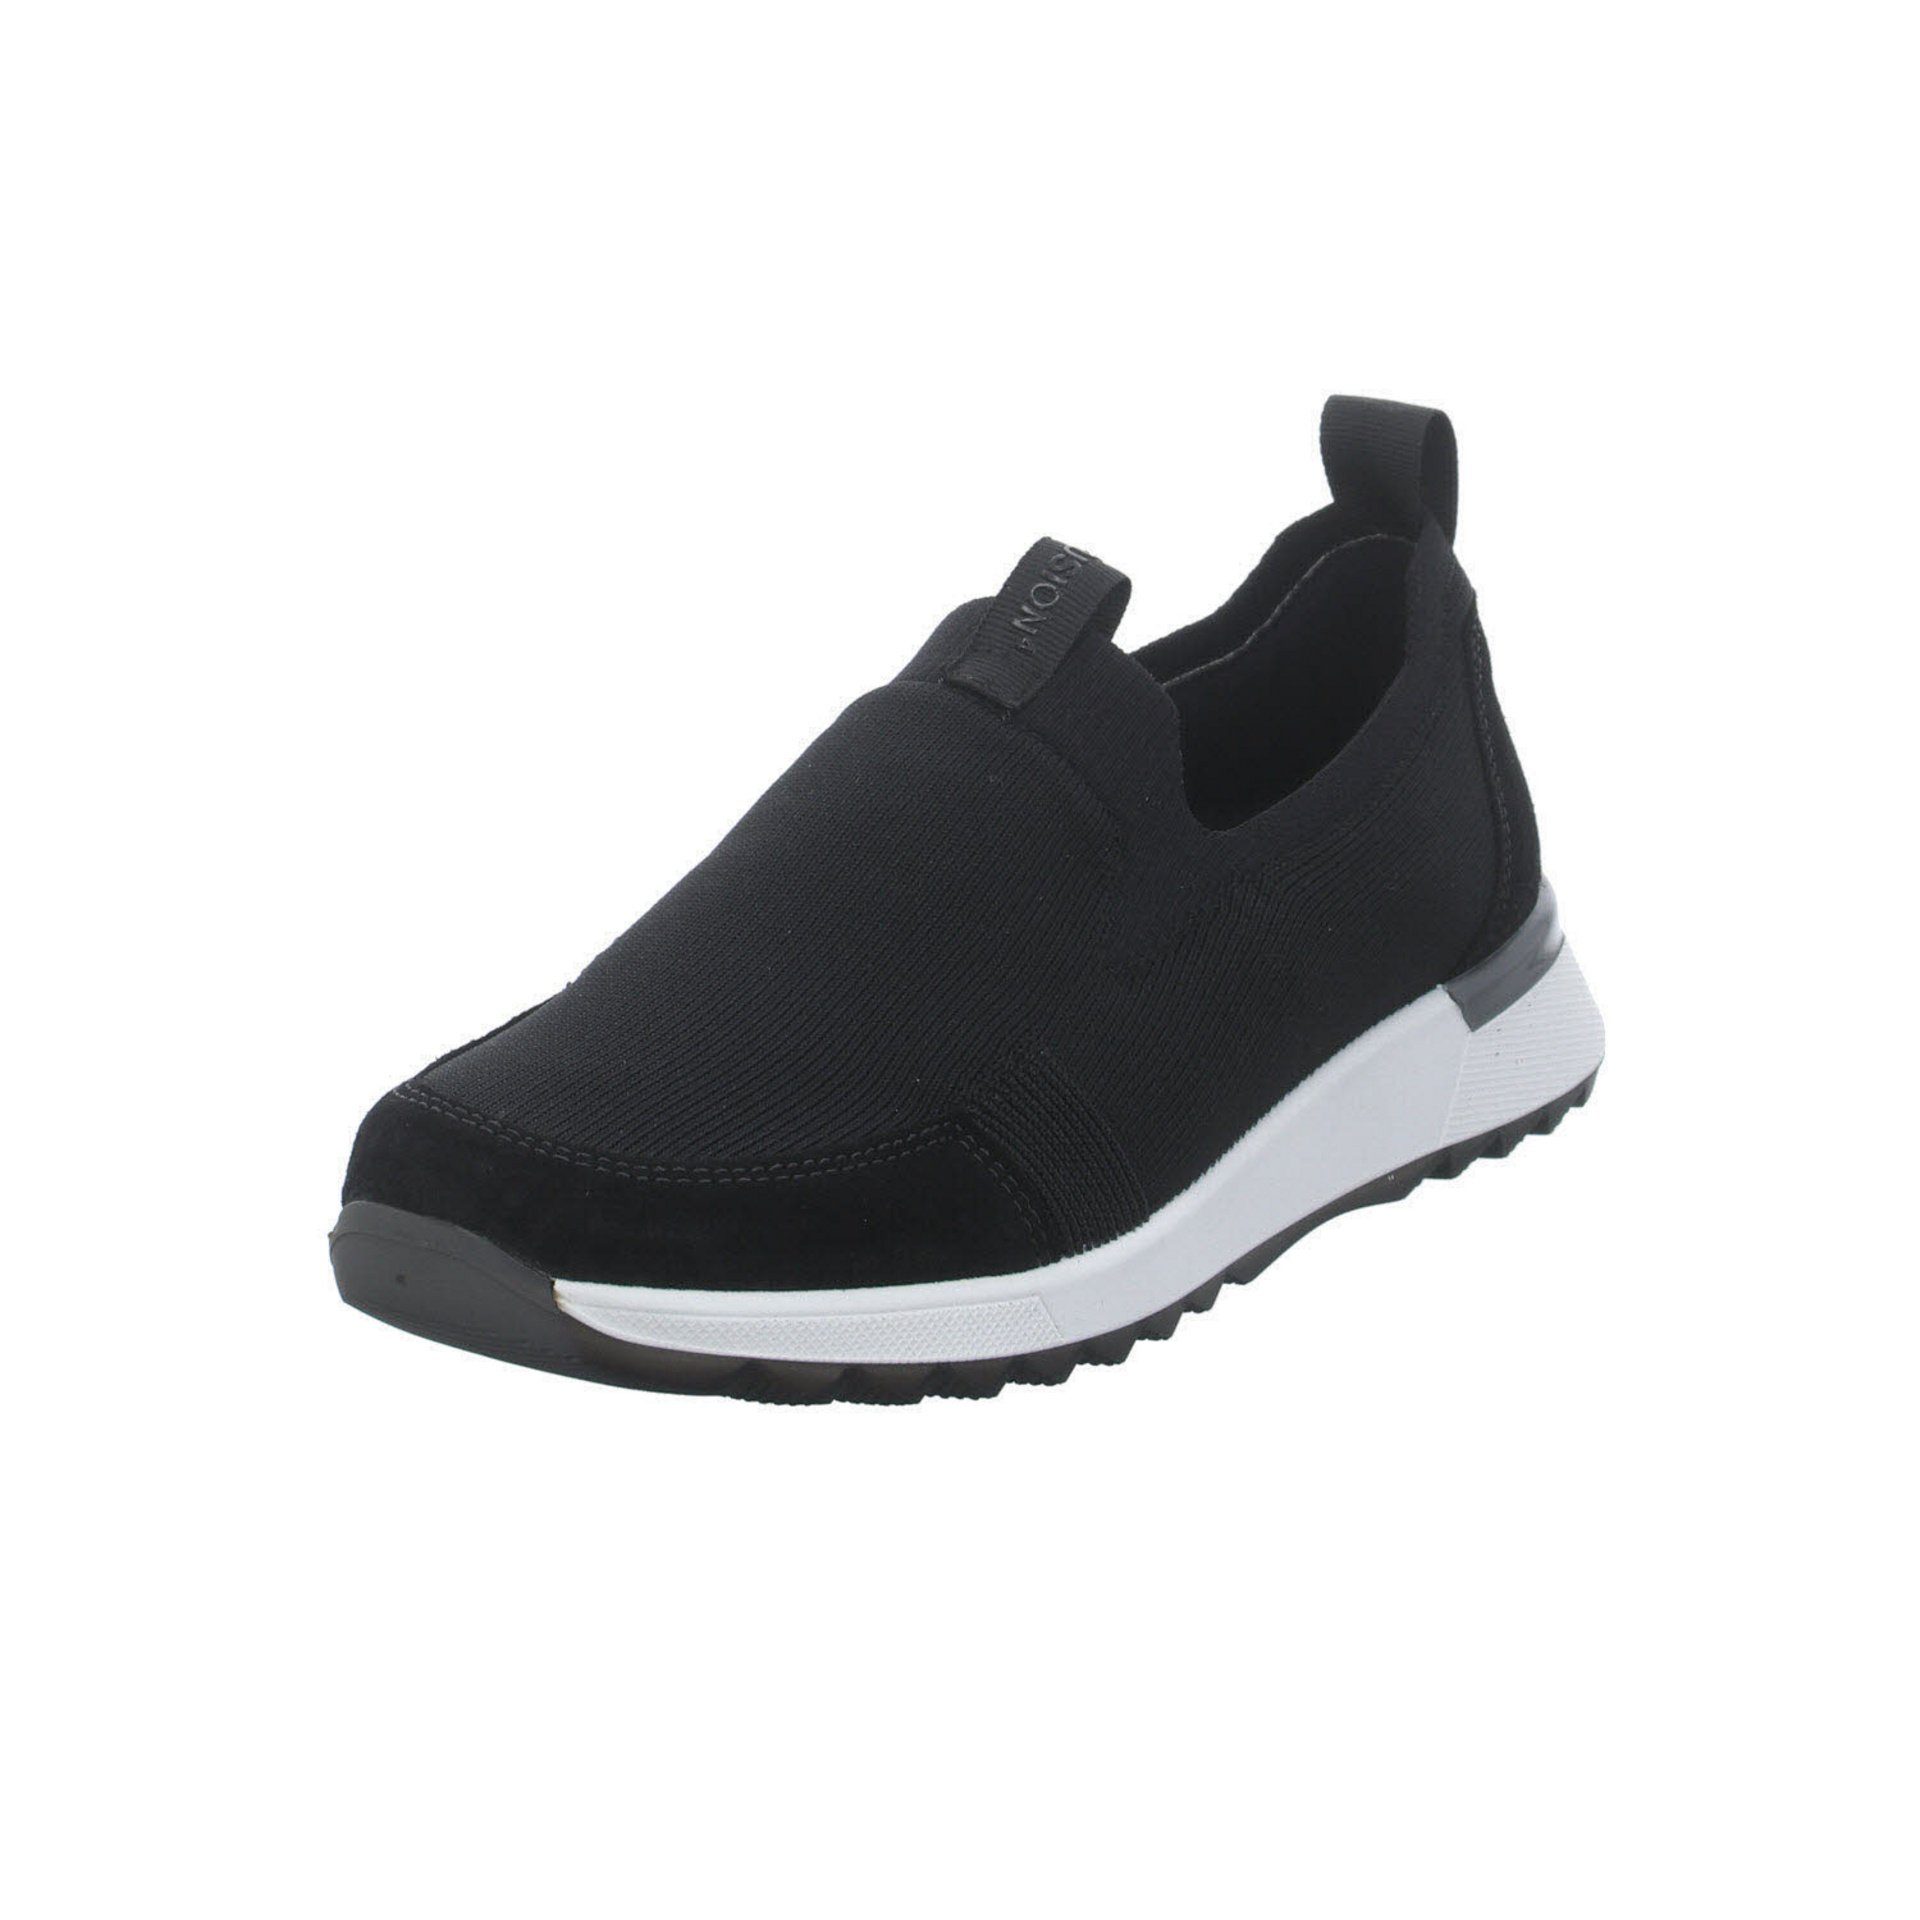 Ara Damen Slipper Schuhe Venice Sport Gore-Tex Sneaker Slipper Textil schwarz dunkel